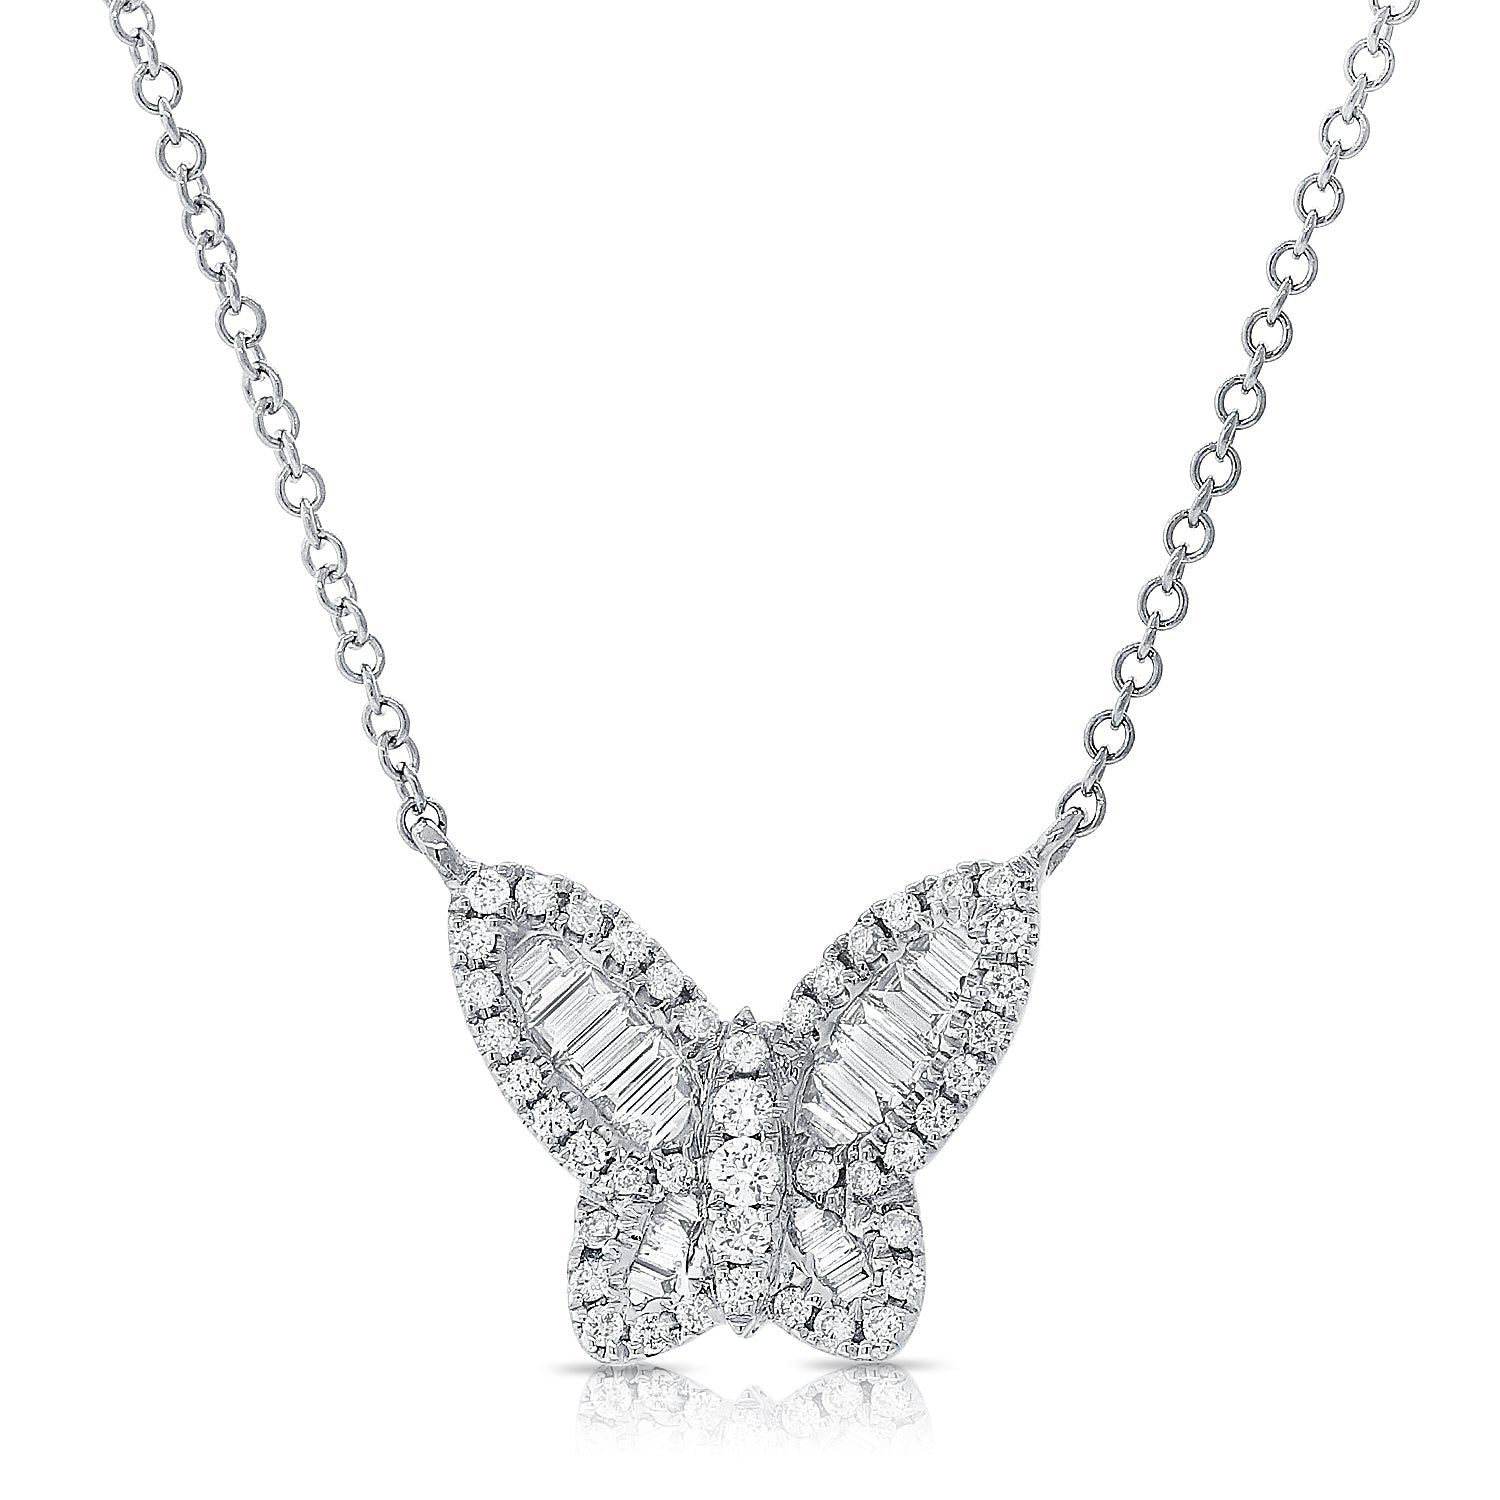 14k Gold & Baguette Diamond Butterfly Necklace